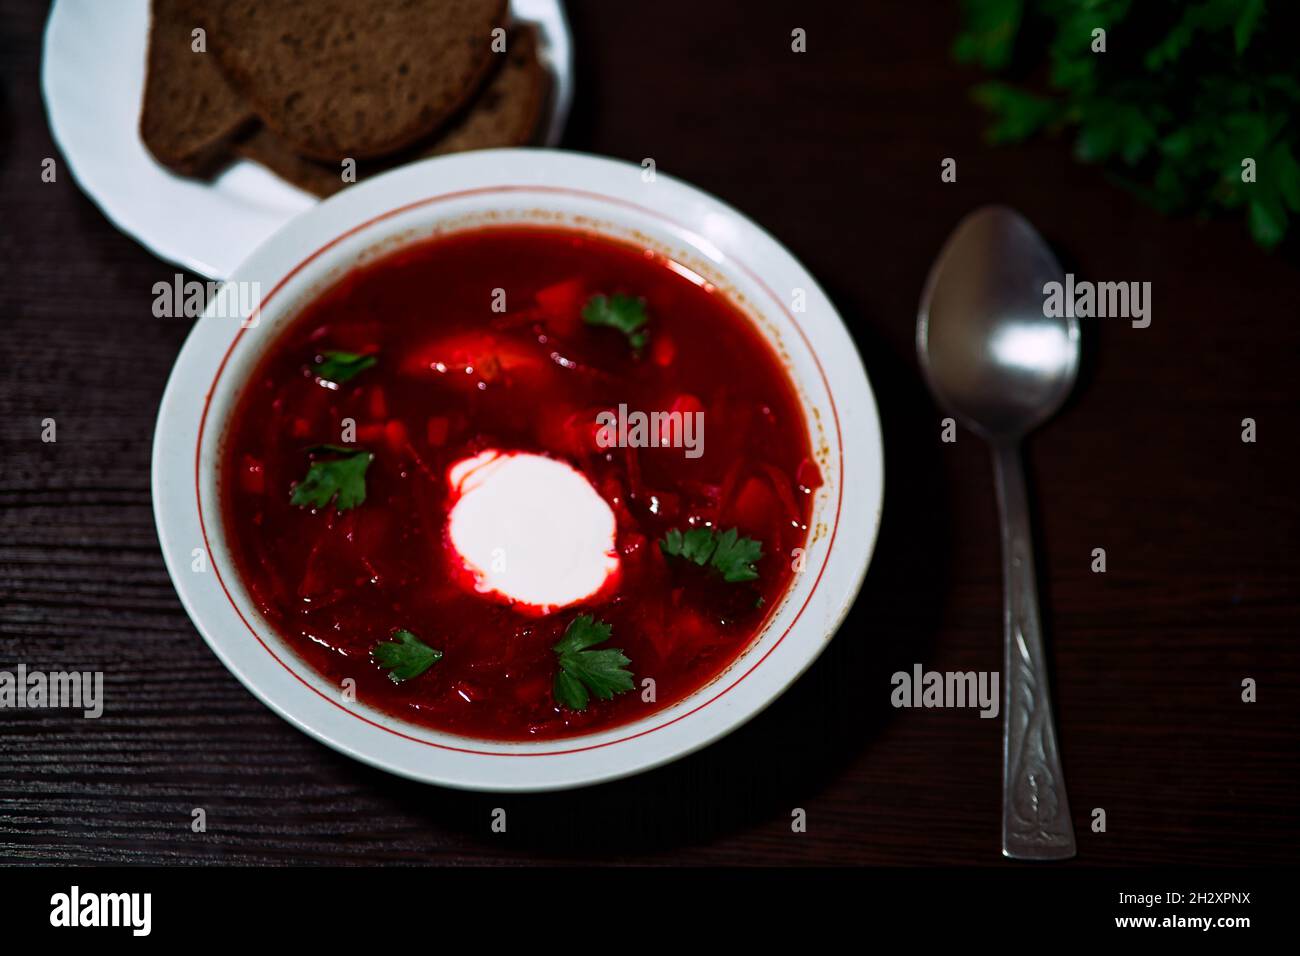 Una vista superior de un plato de borsch rojo ruso sobre una superficie oscura. Foto de stock